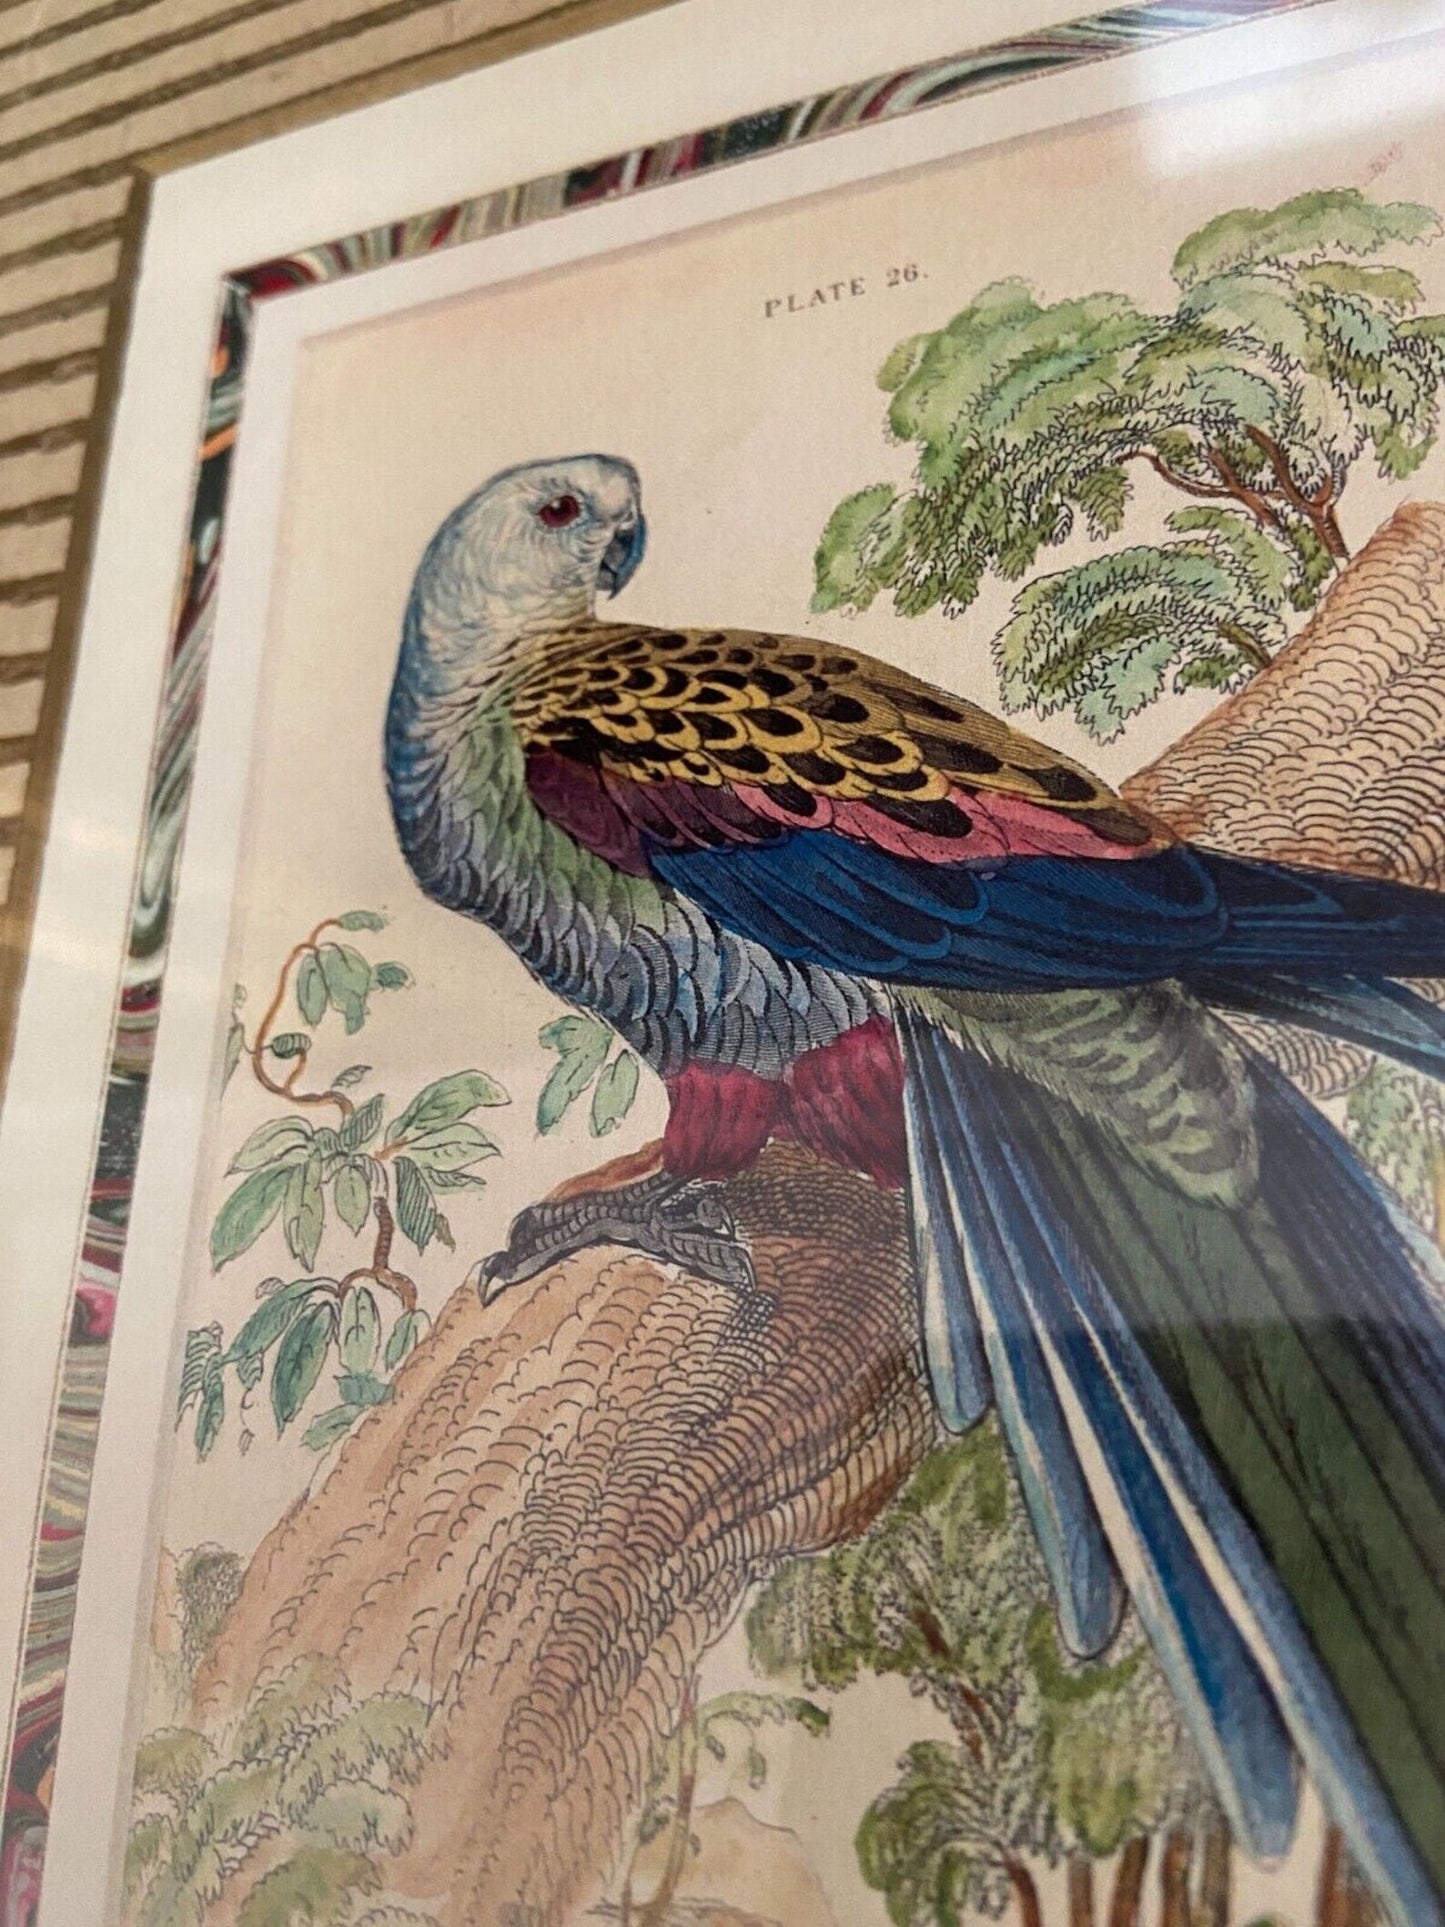 Pair Vintage Gilt Framed Jardine Parrot Bird Prints, 21.75ʺW × 2ʺD × 25.5ʺH - Excellent!